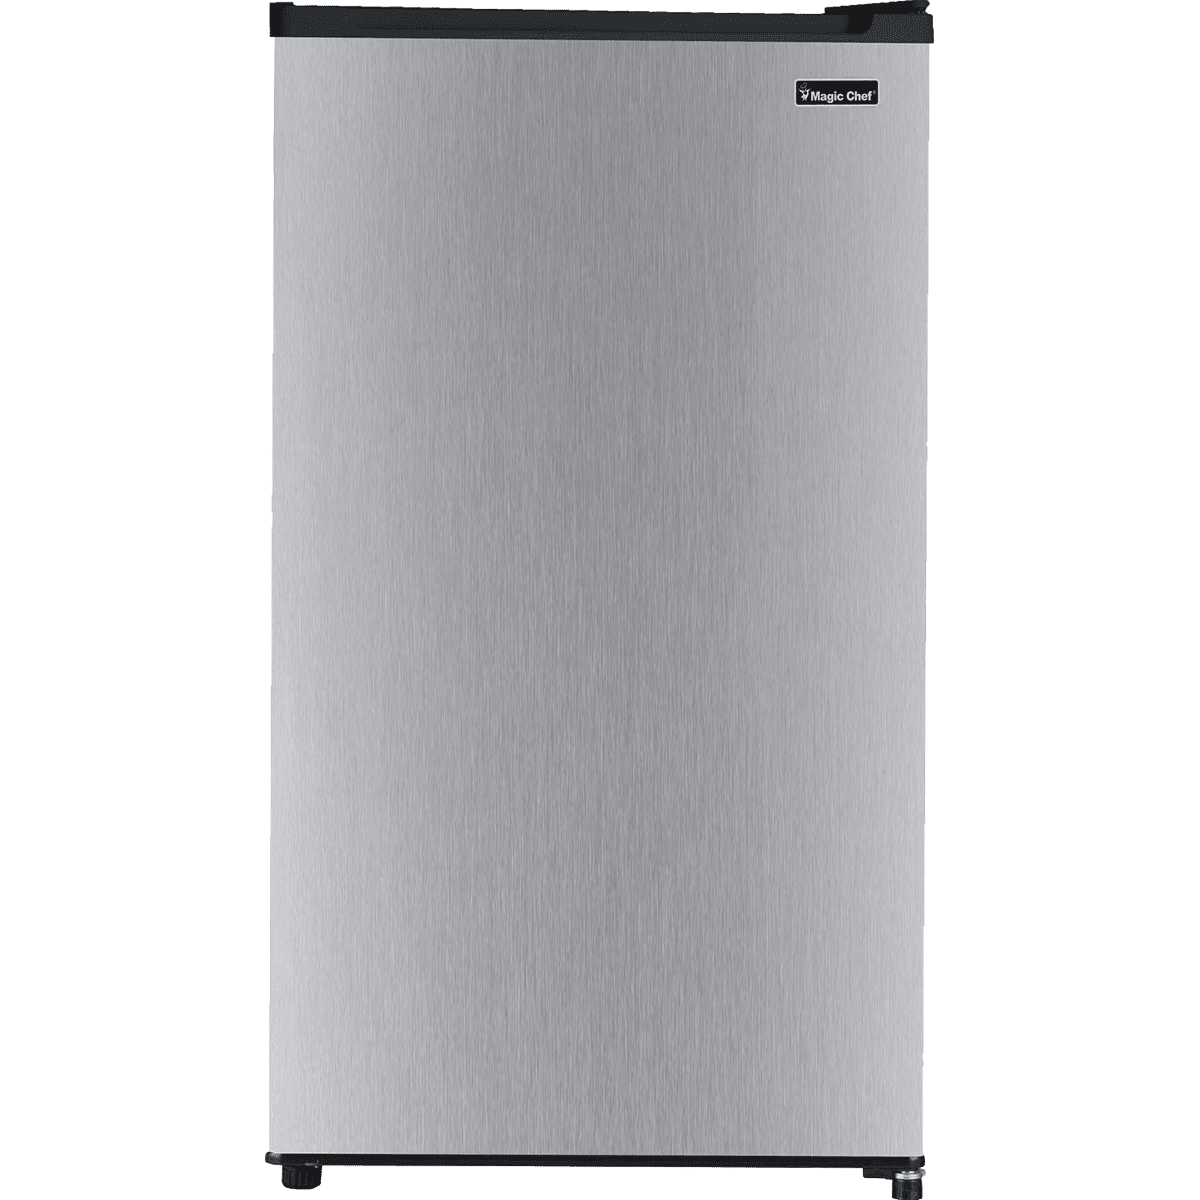 Magic Chef 3.2 Cu. Ft. Mini Refrigerator